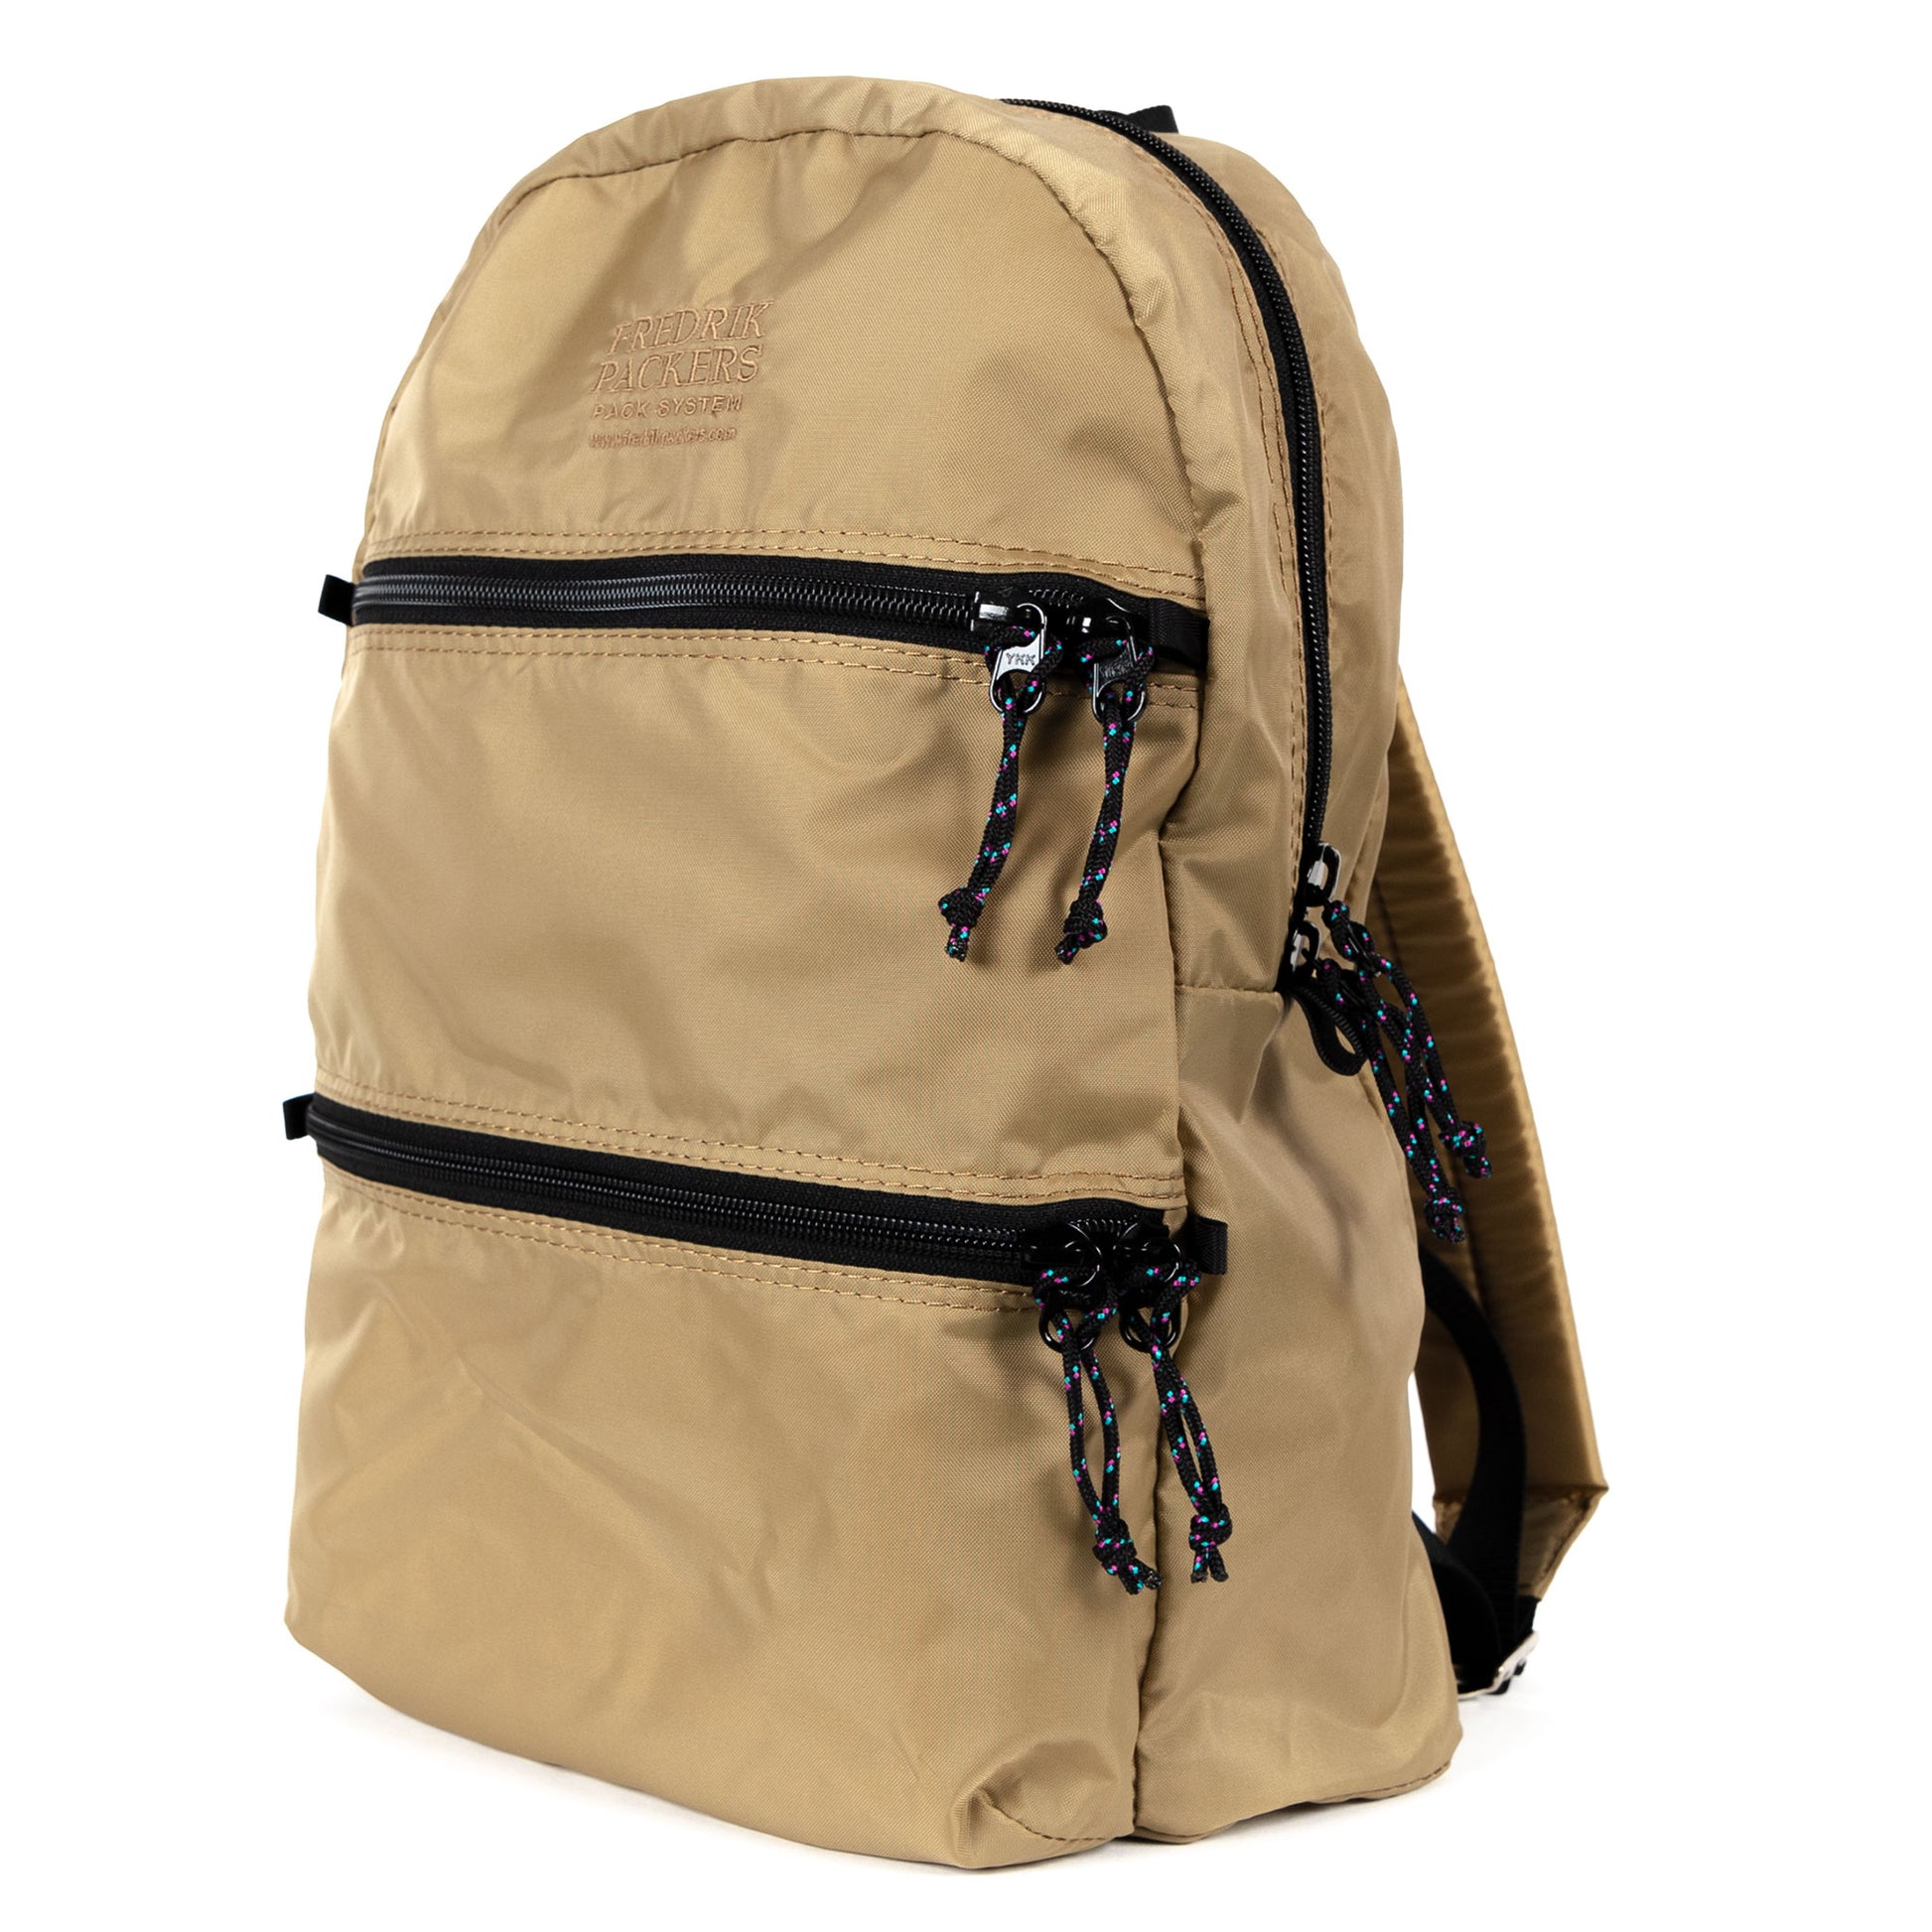 fredrik packers double zip backpack in kahki